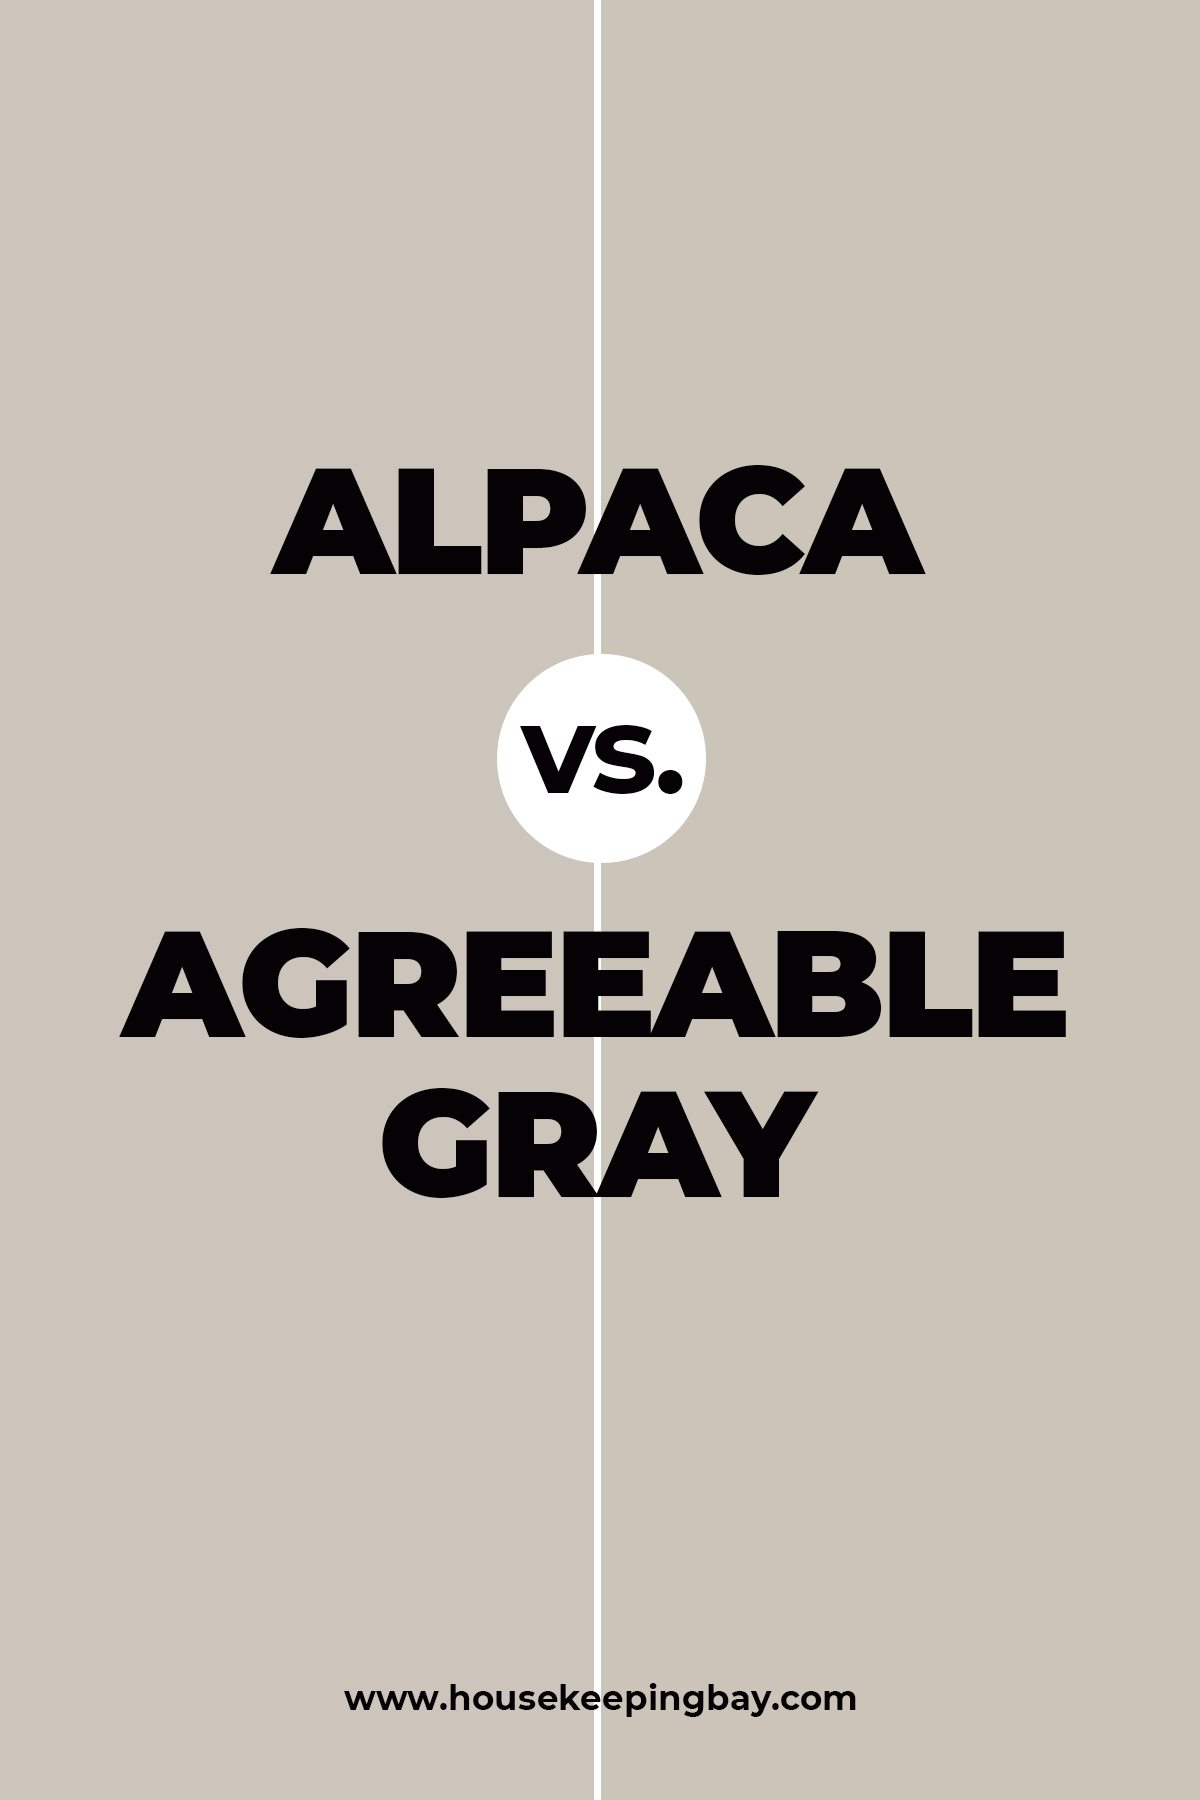 Alpaca vs. Agreeable Gray